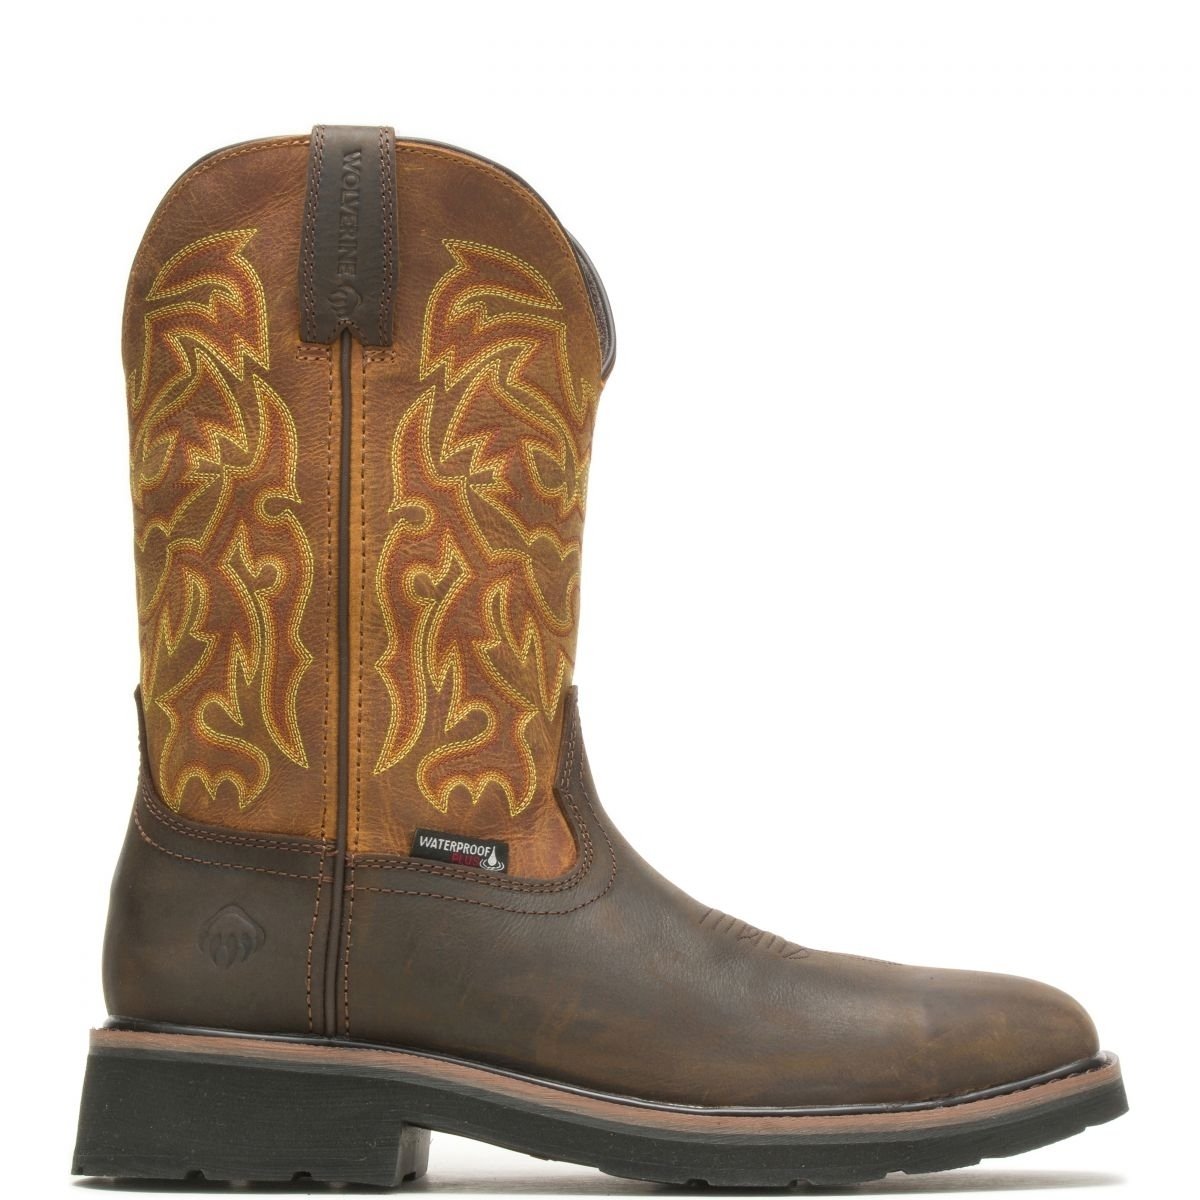 WOLVERINE Men's Rancher 10 Steel Toe Waterproof Work Boot Golden/Brown - W221029 GOLDEN/BROWN - GOLDEN/BROWN, 9-M